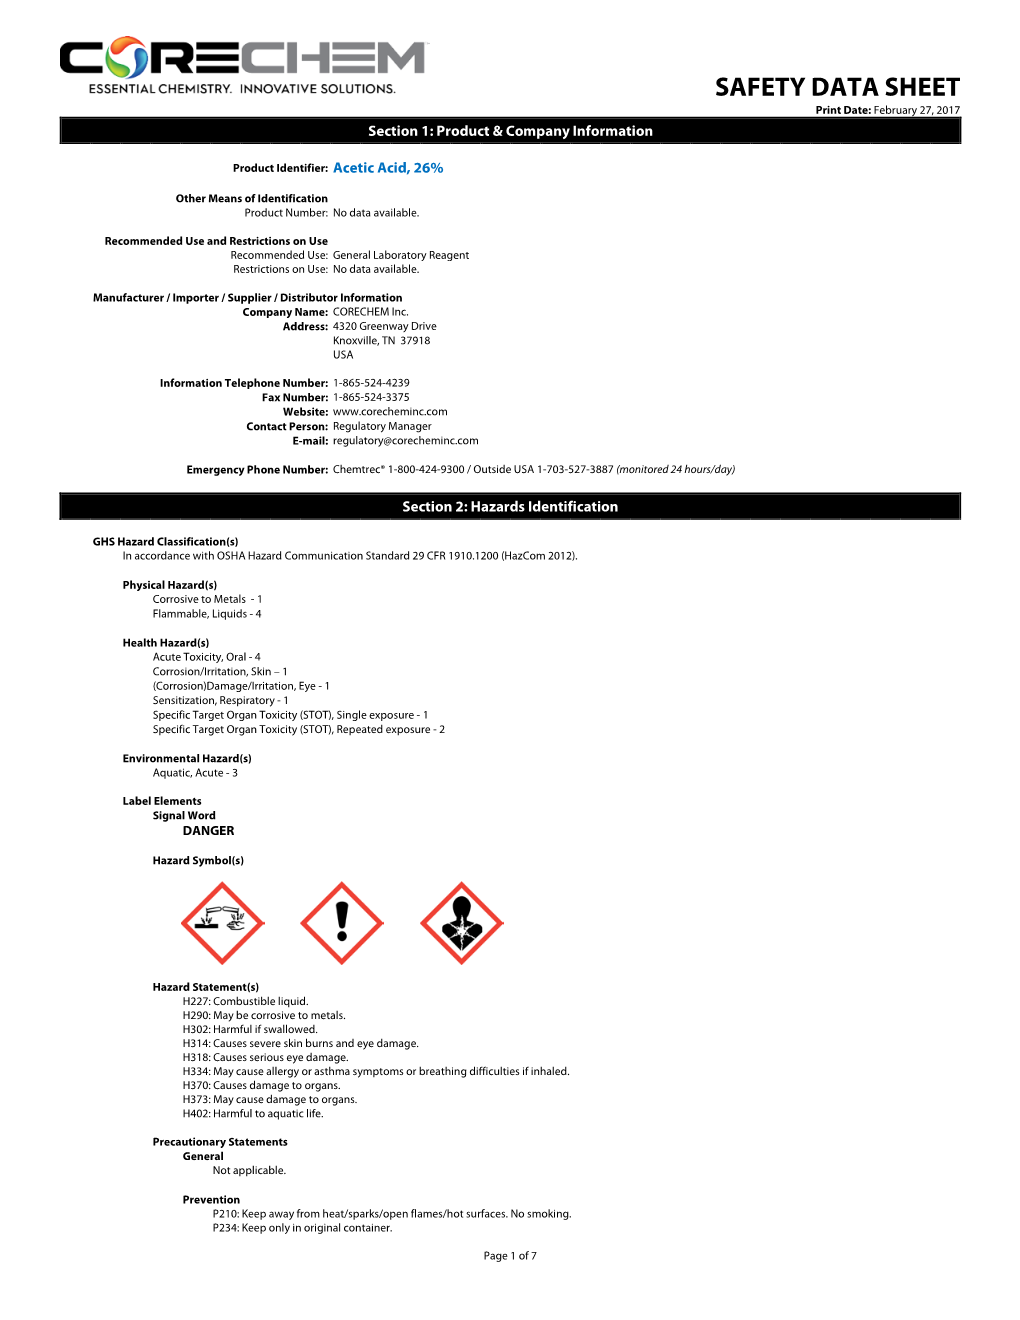 Acetic Acid, 26% Safety Data Sheet